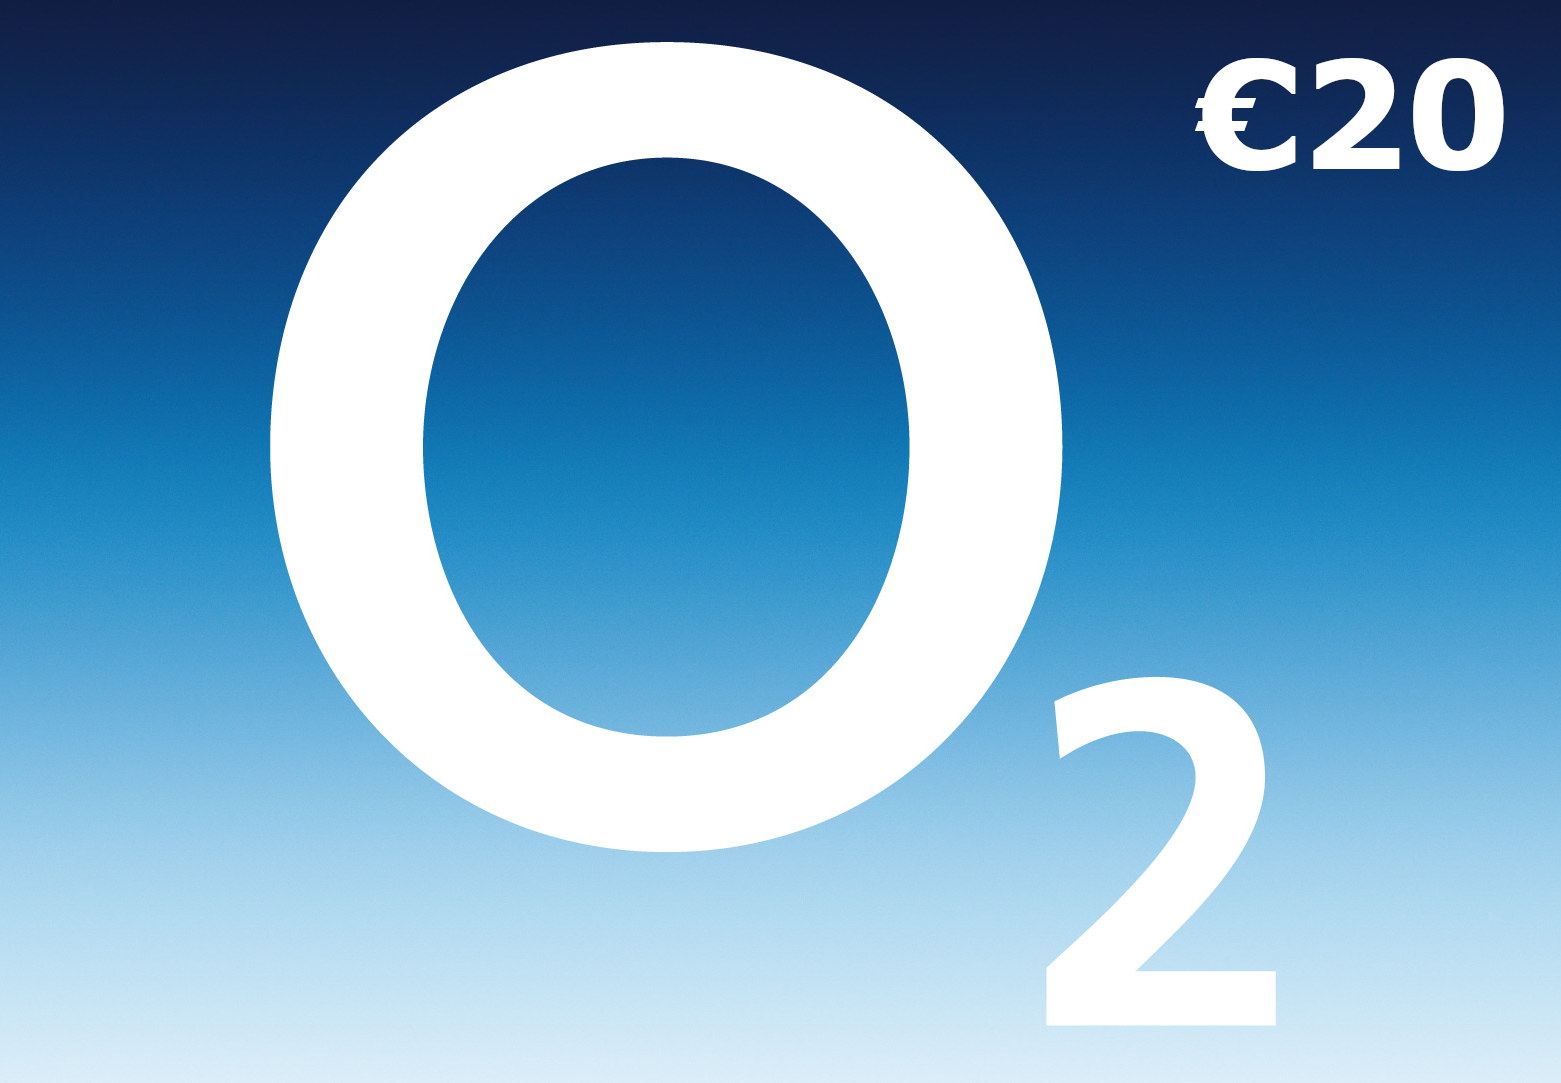 O2 €20 Mobile Top-up DE